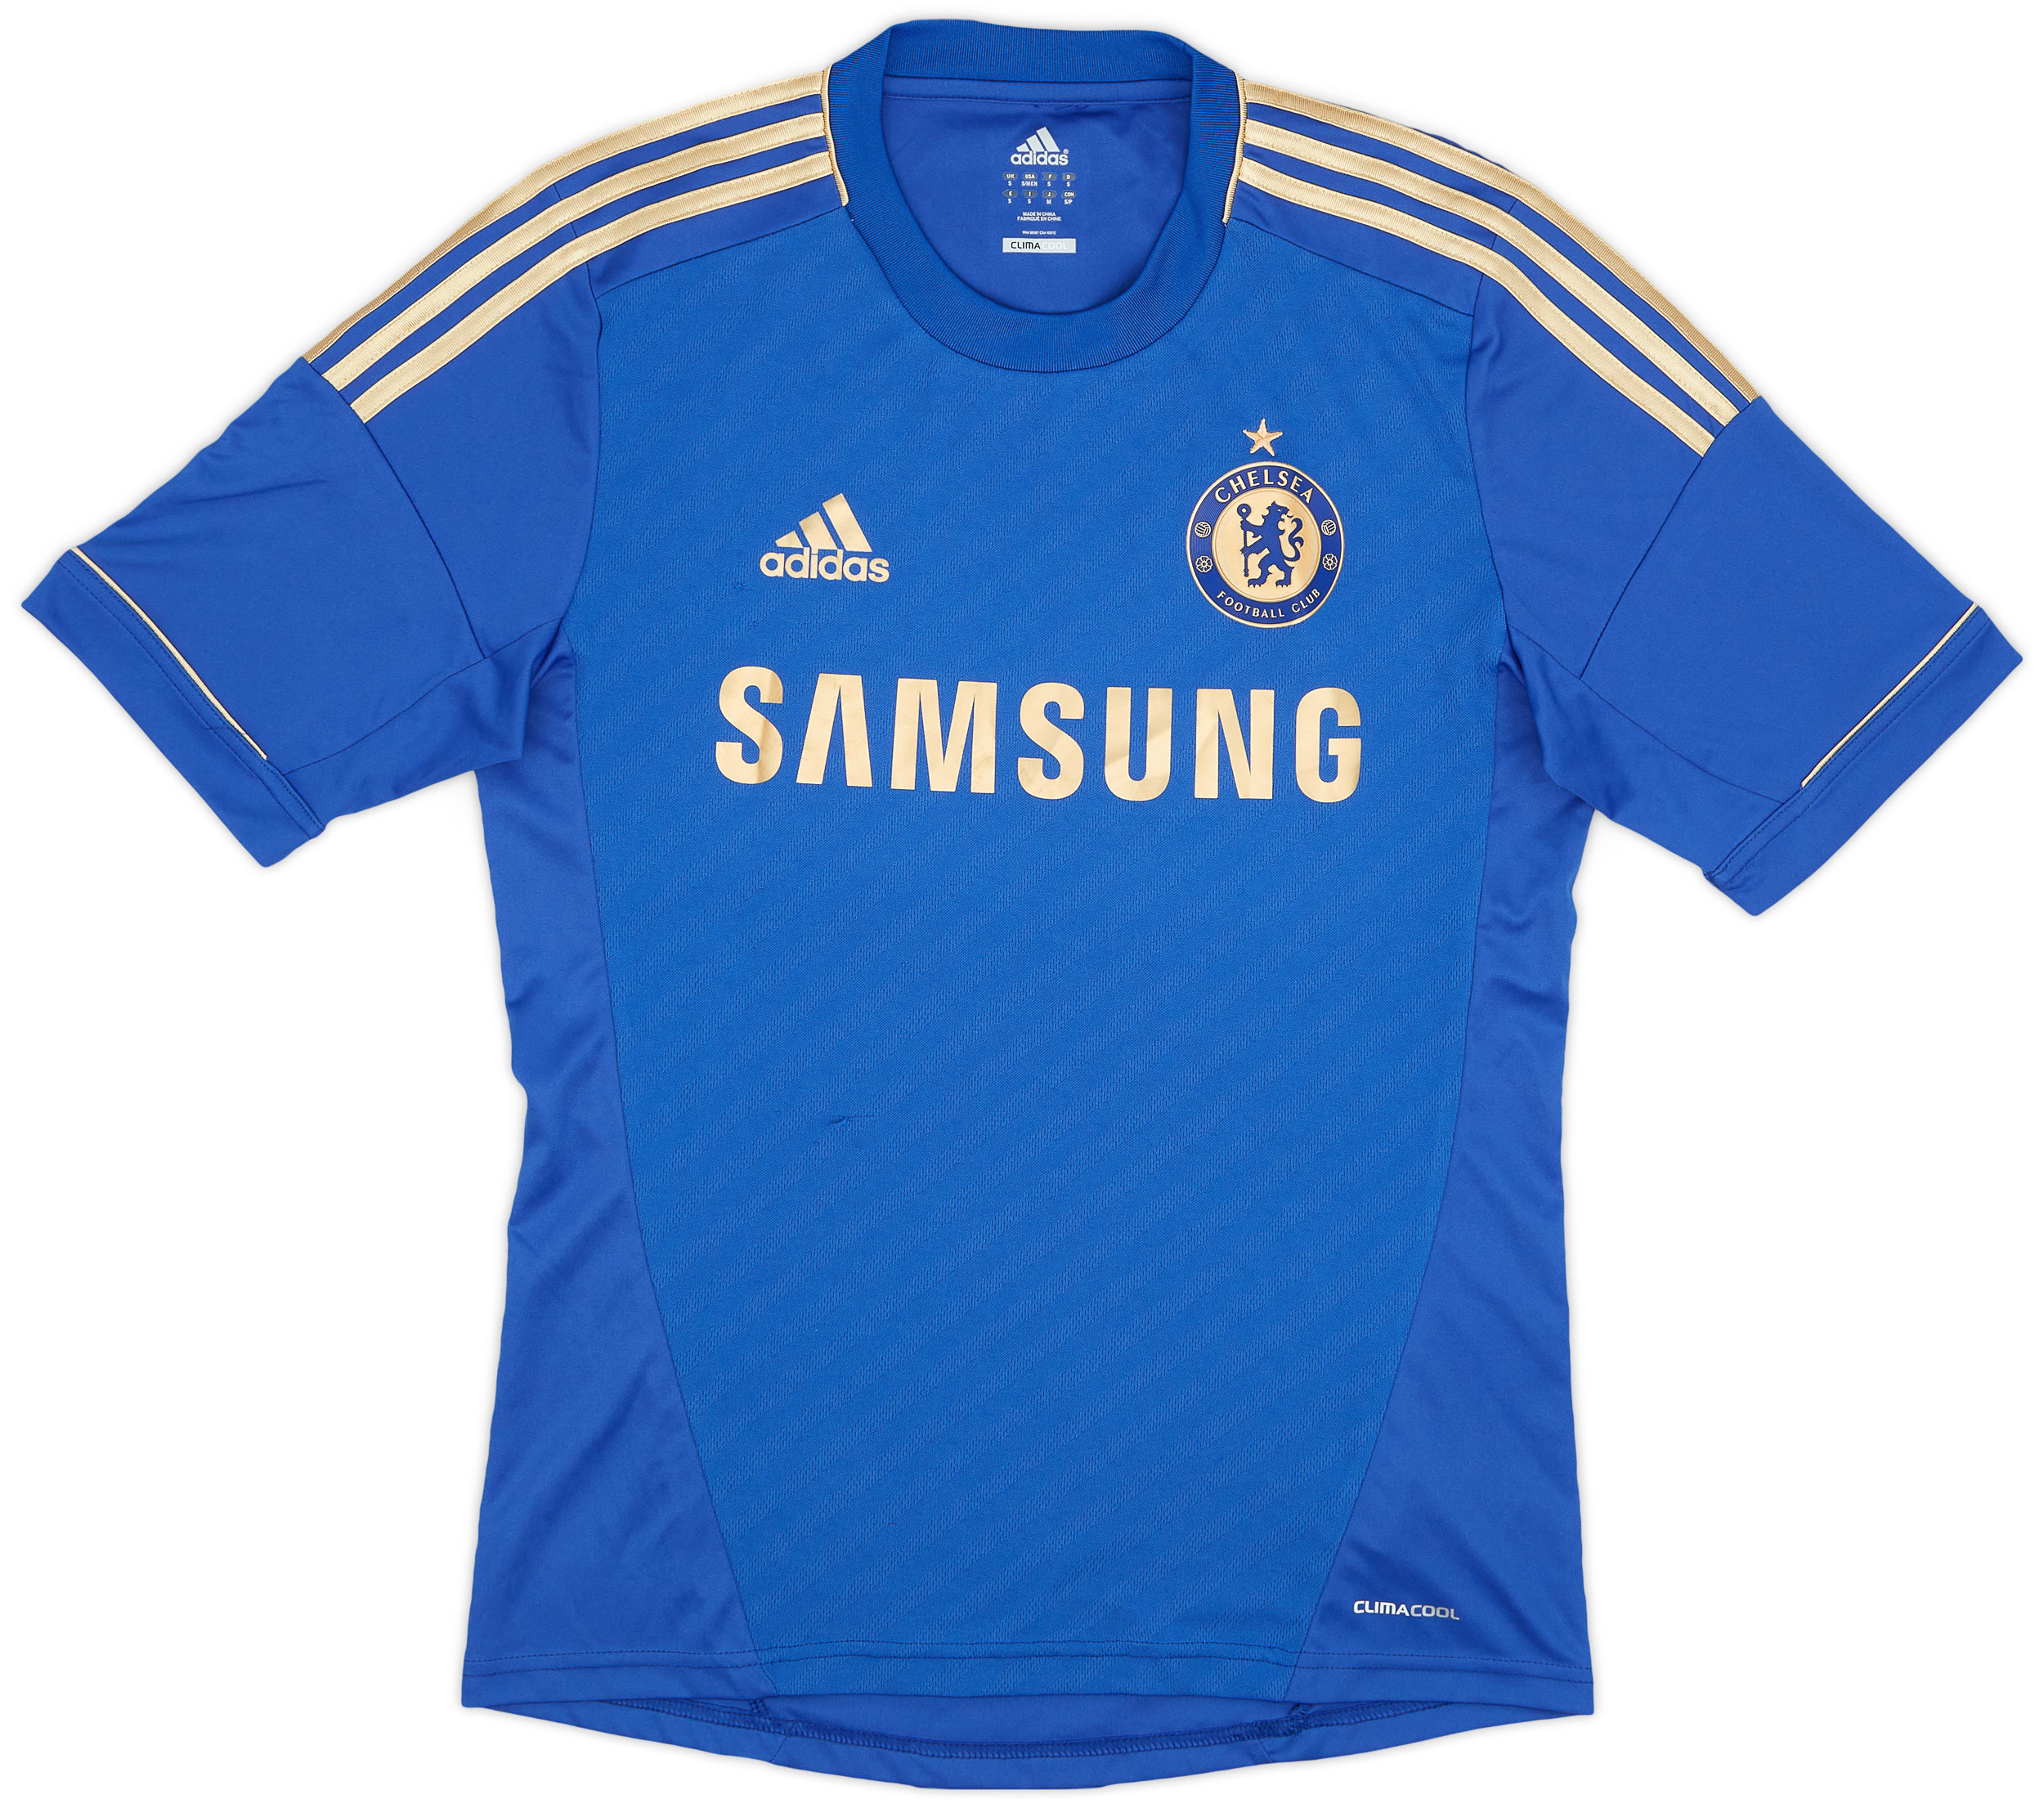 2012-13 Chelsea Home Shirt - 9/10 - ()